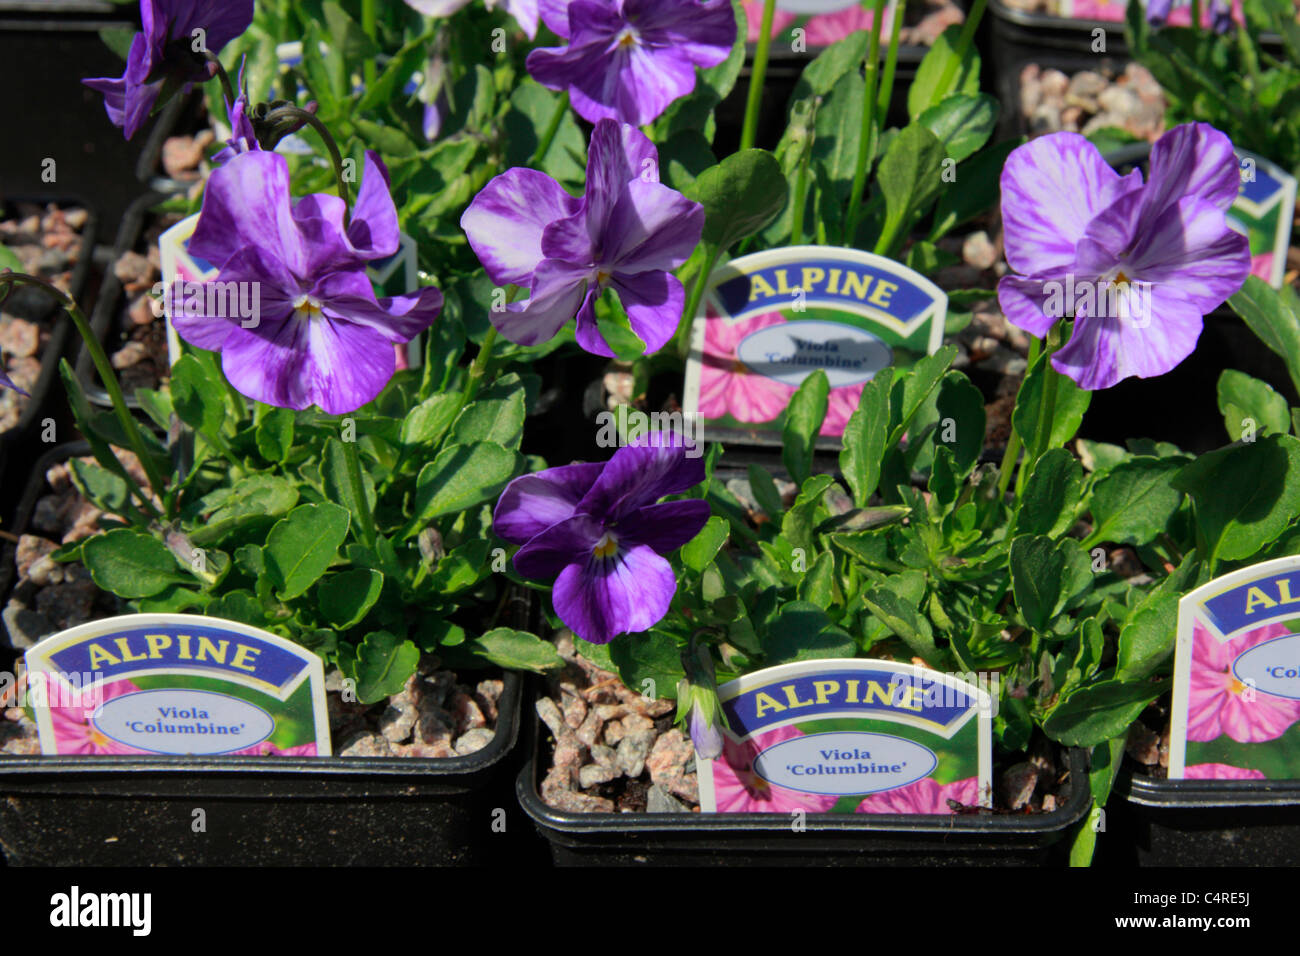 Viola plants in pots in garden centre Stock Photo